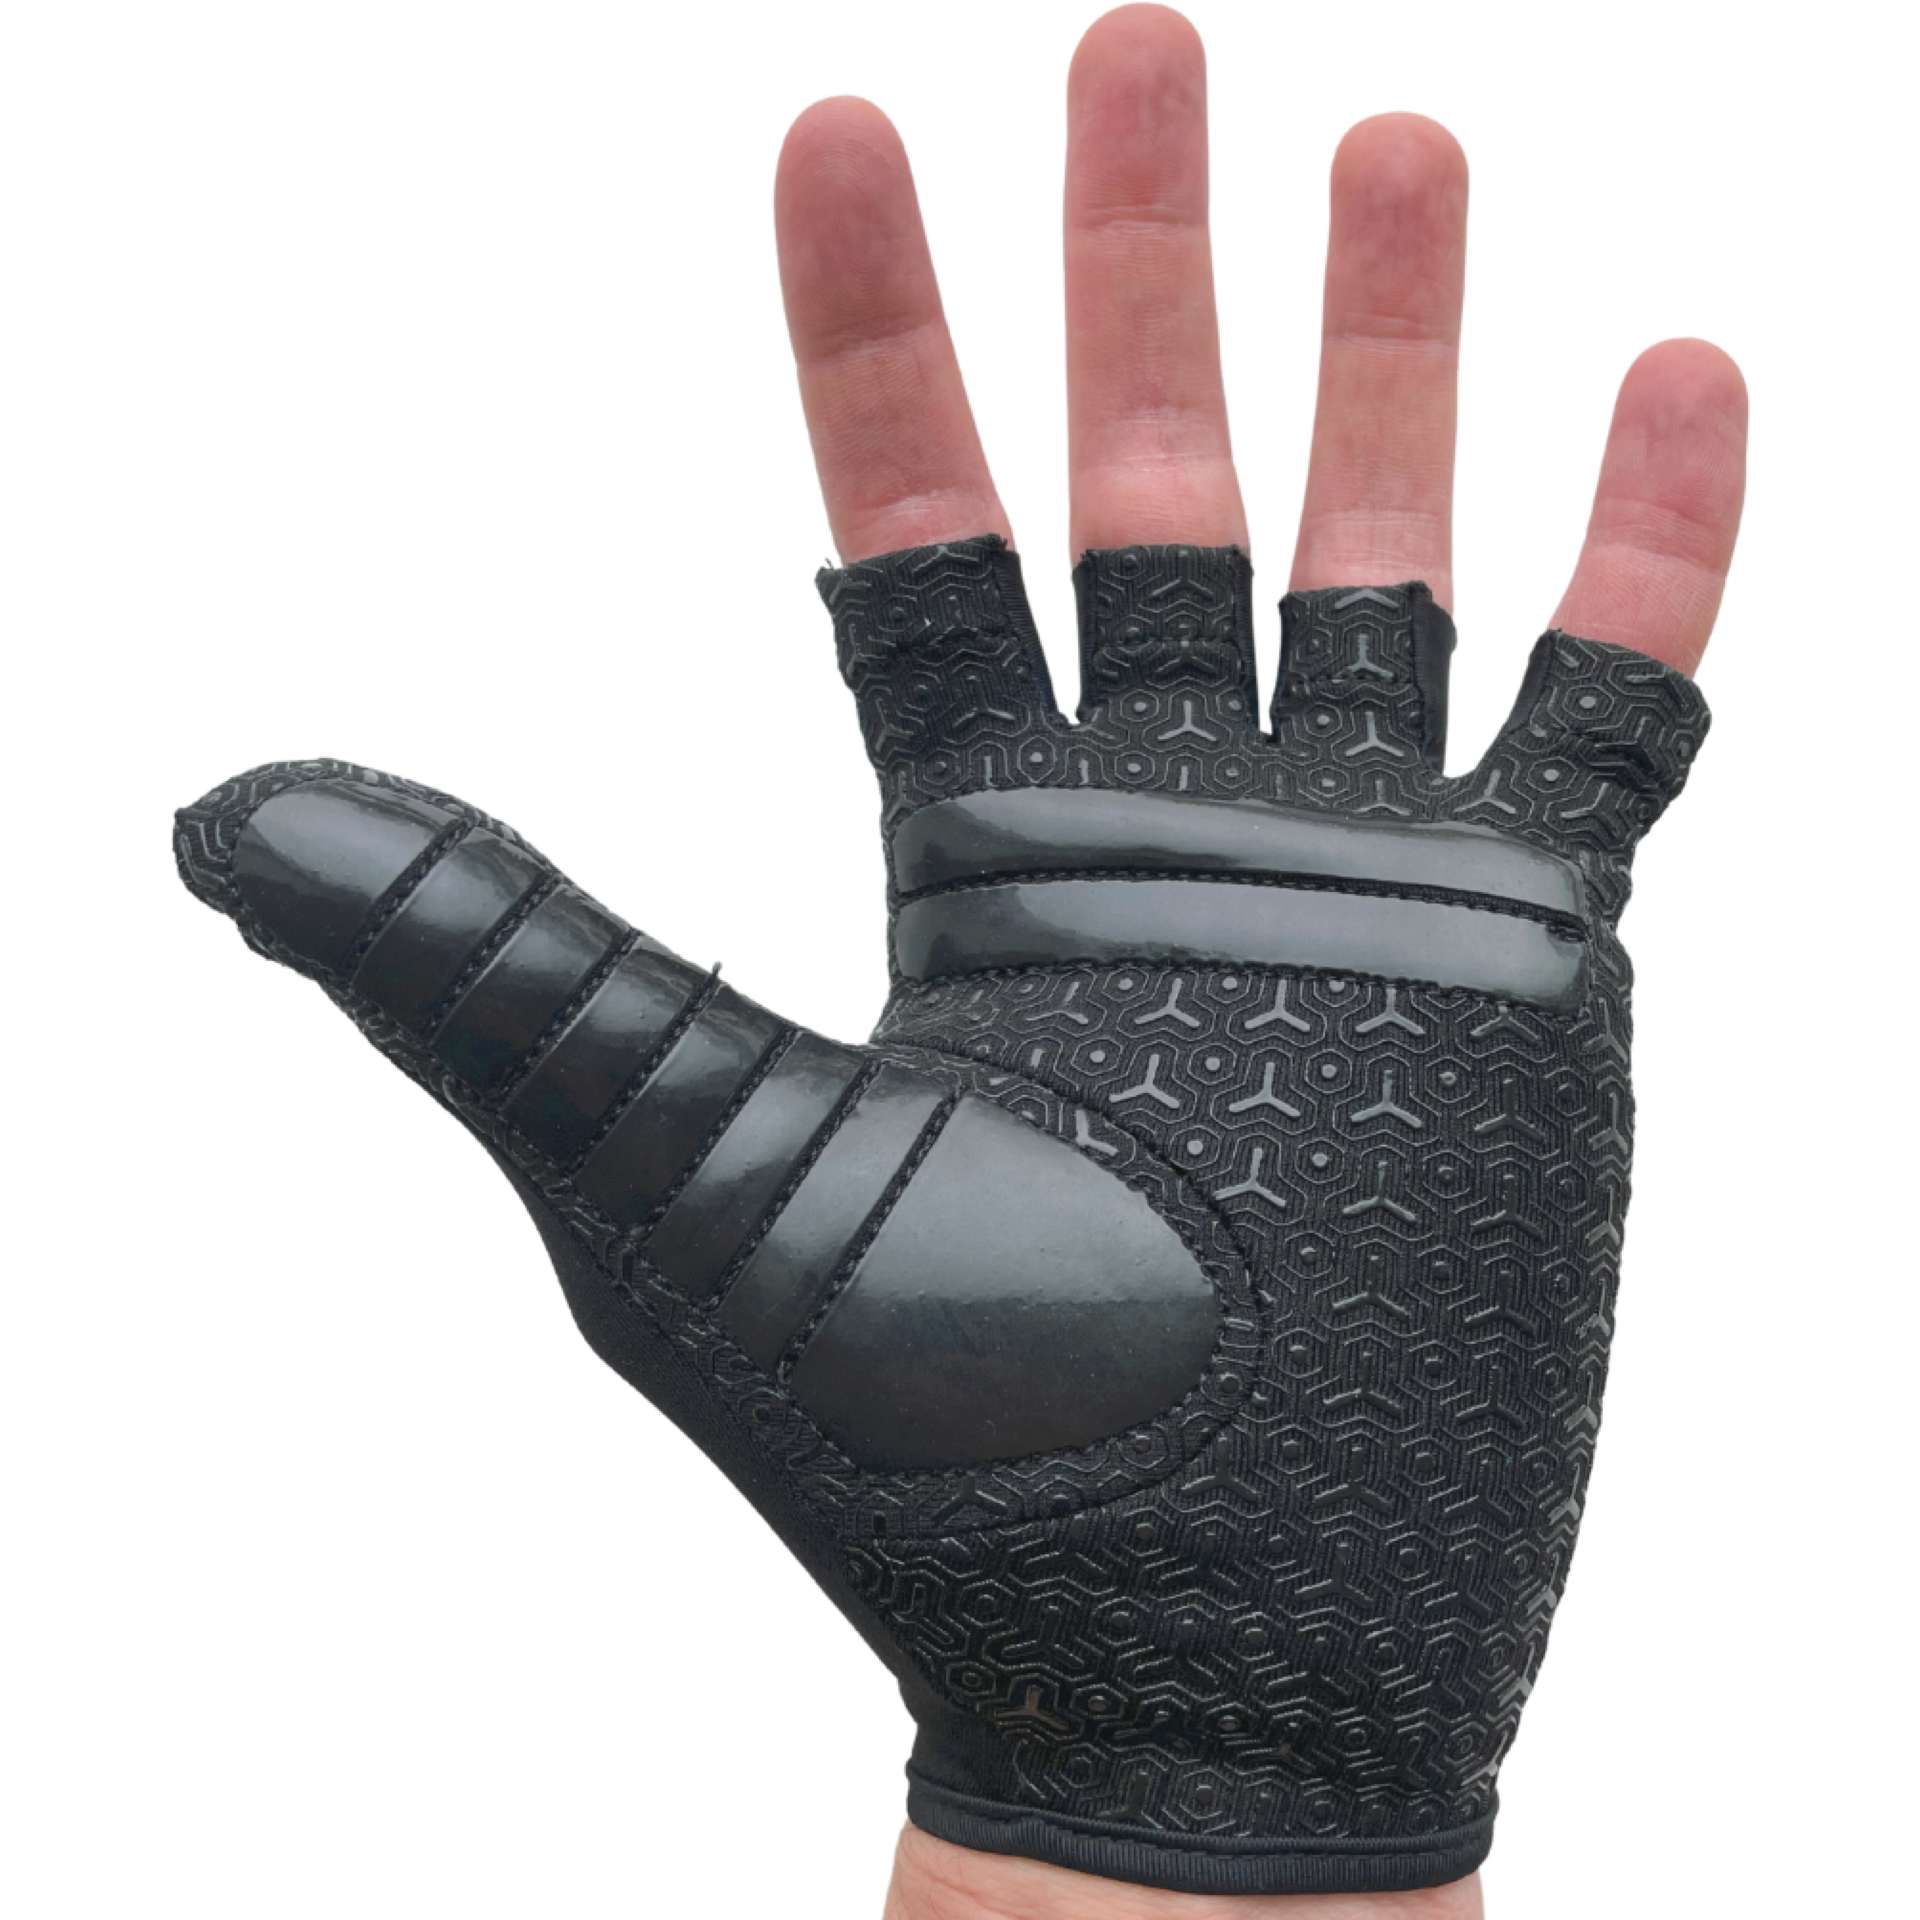 Paddle Wedge Trinty Glove